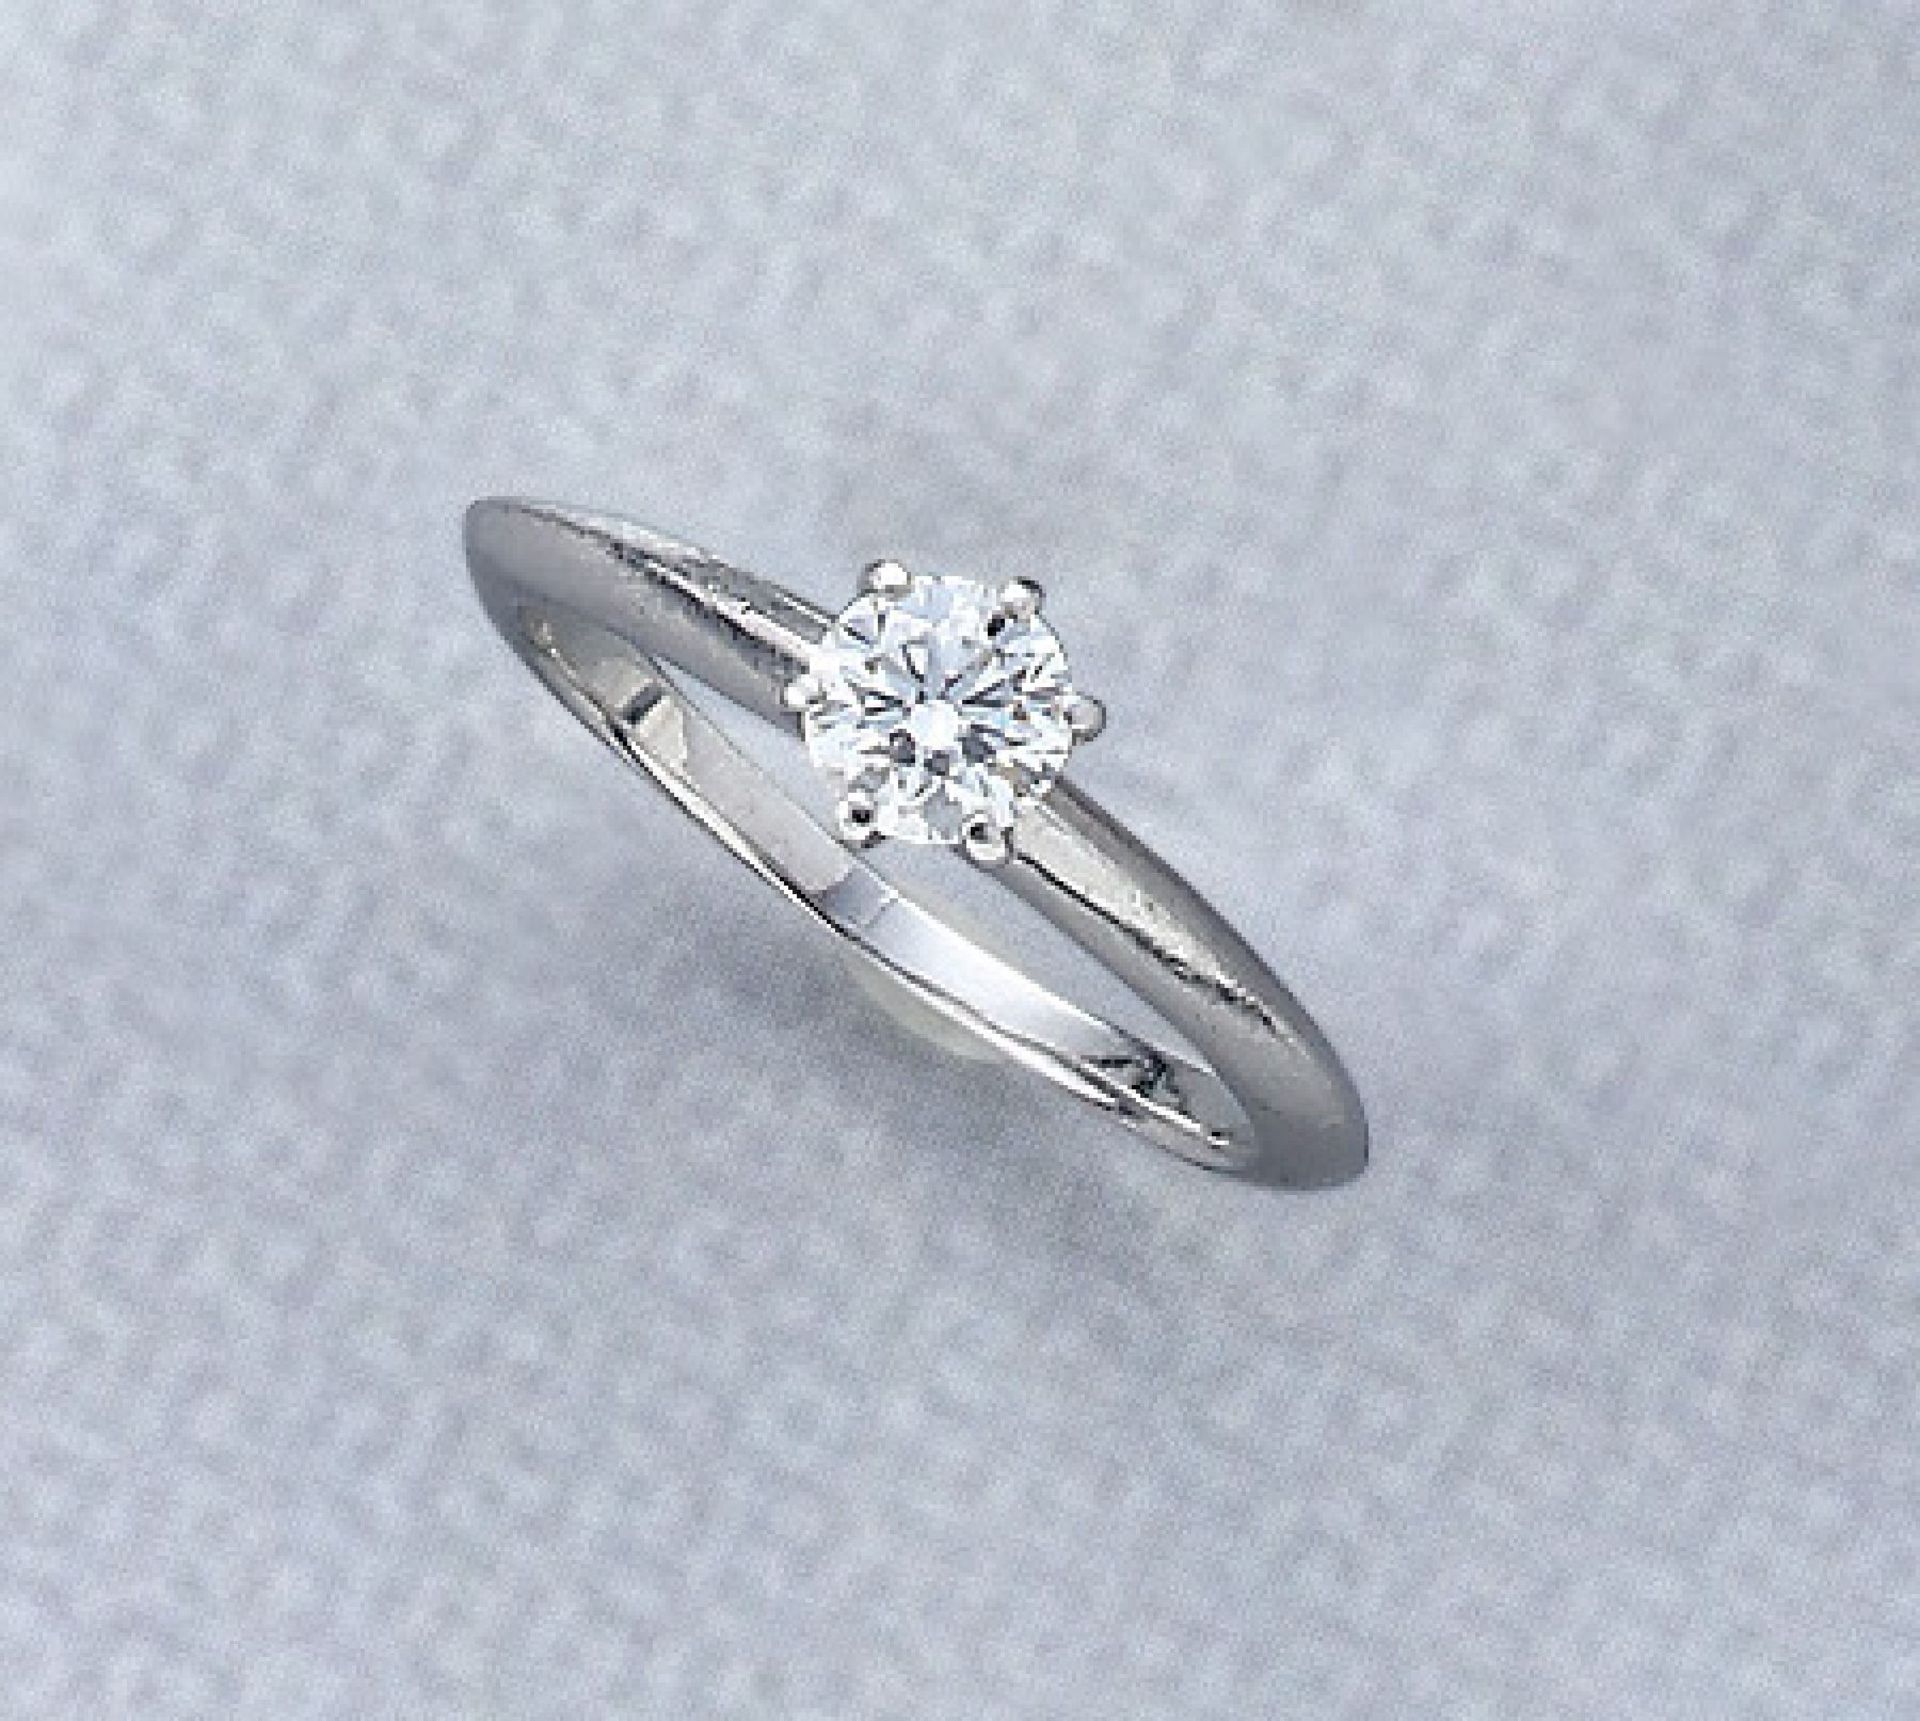 TIFFANY & CO. platinum ring with brilliant ,Pt 950/000, brilliant approx. 0.45 ct Wesselton/vs1,